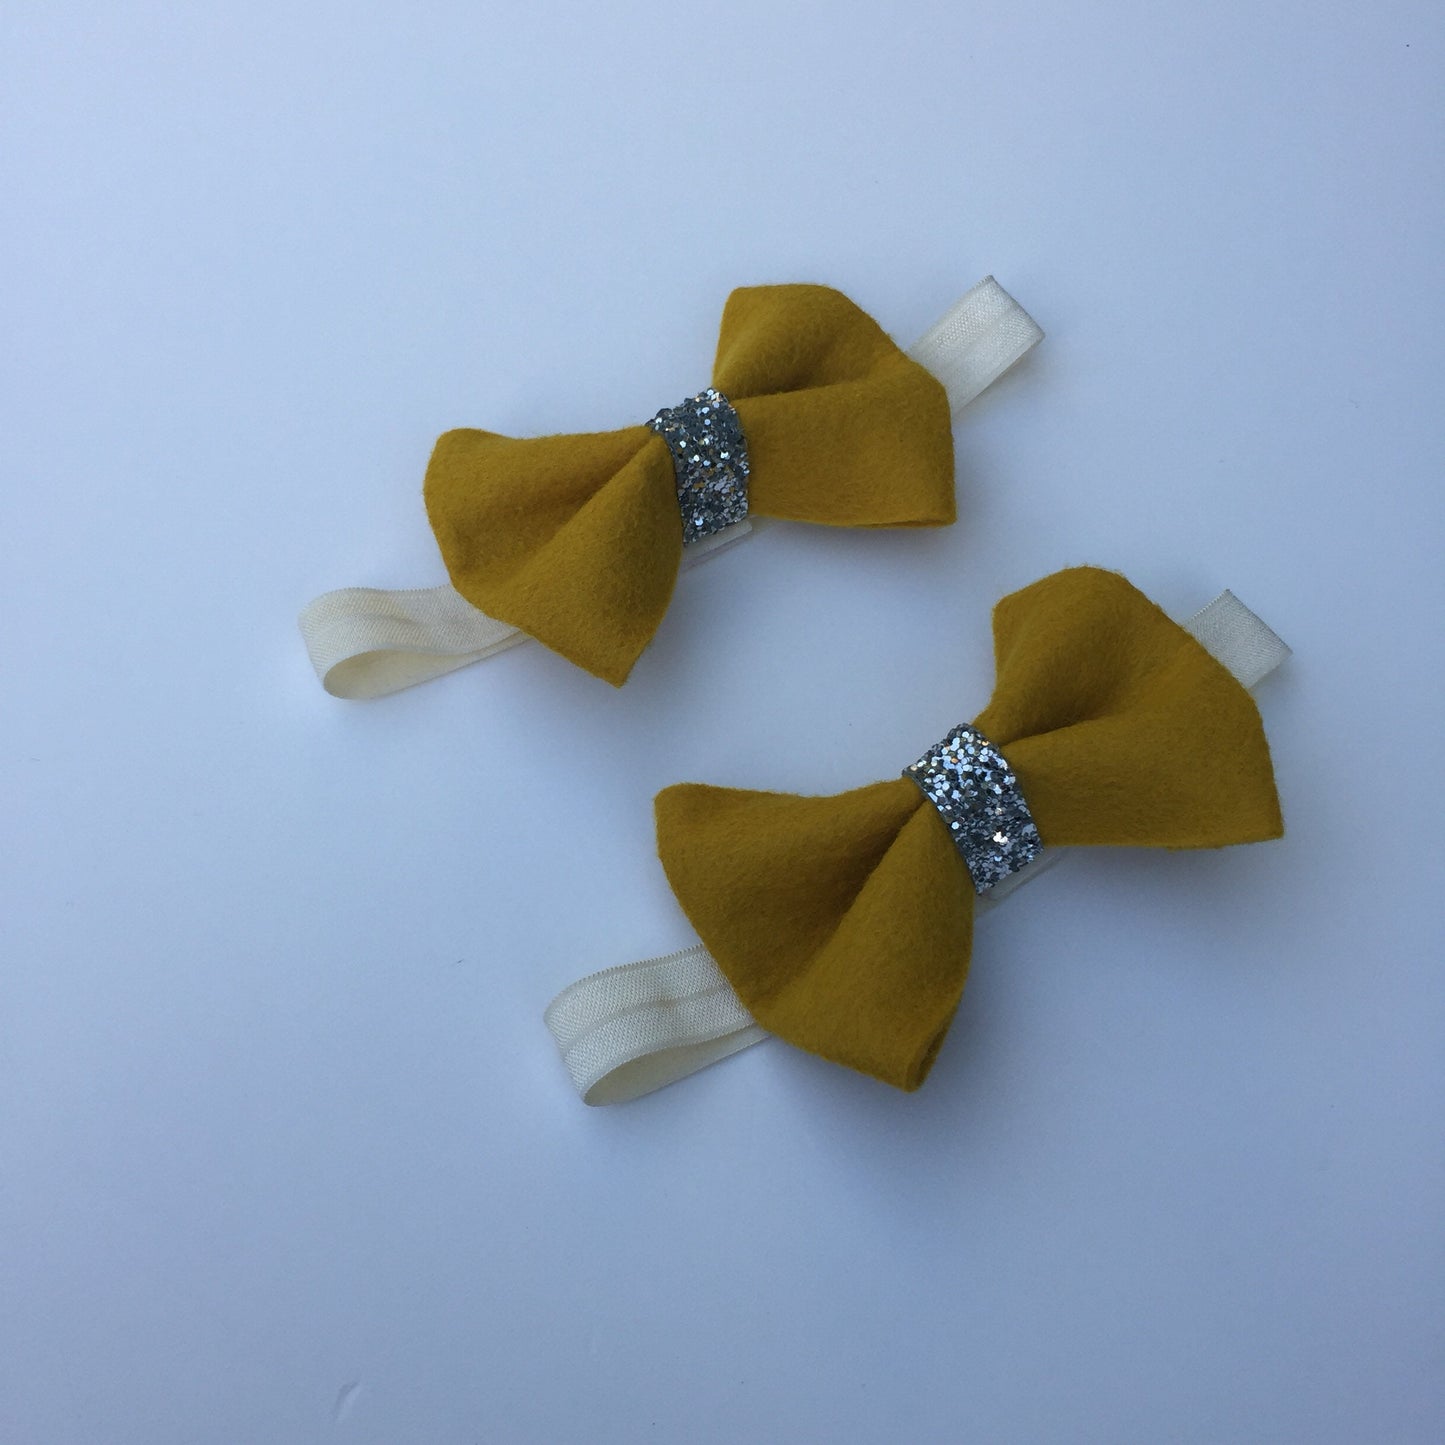 Matching bow tie custom made